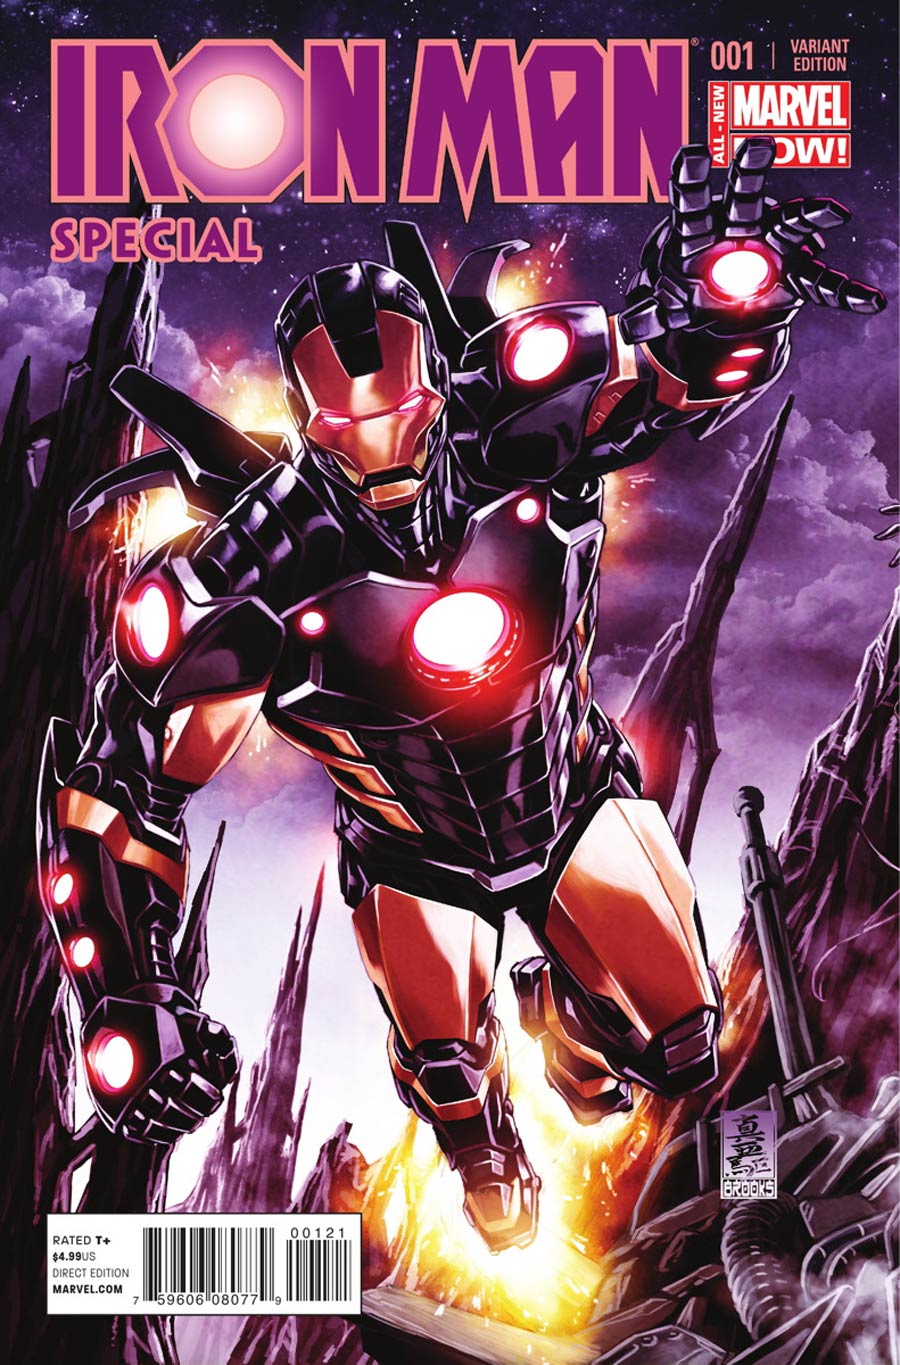 Iron Man Special Vol 2 #1 Cover B Variant Interlocking Cover